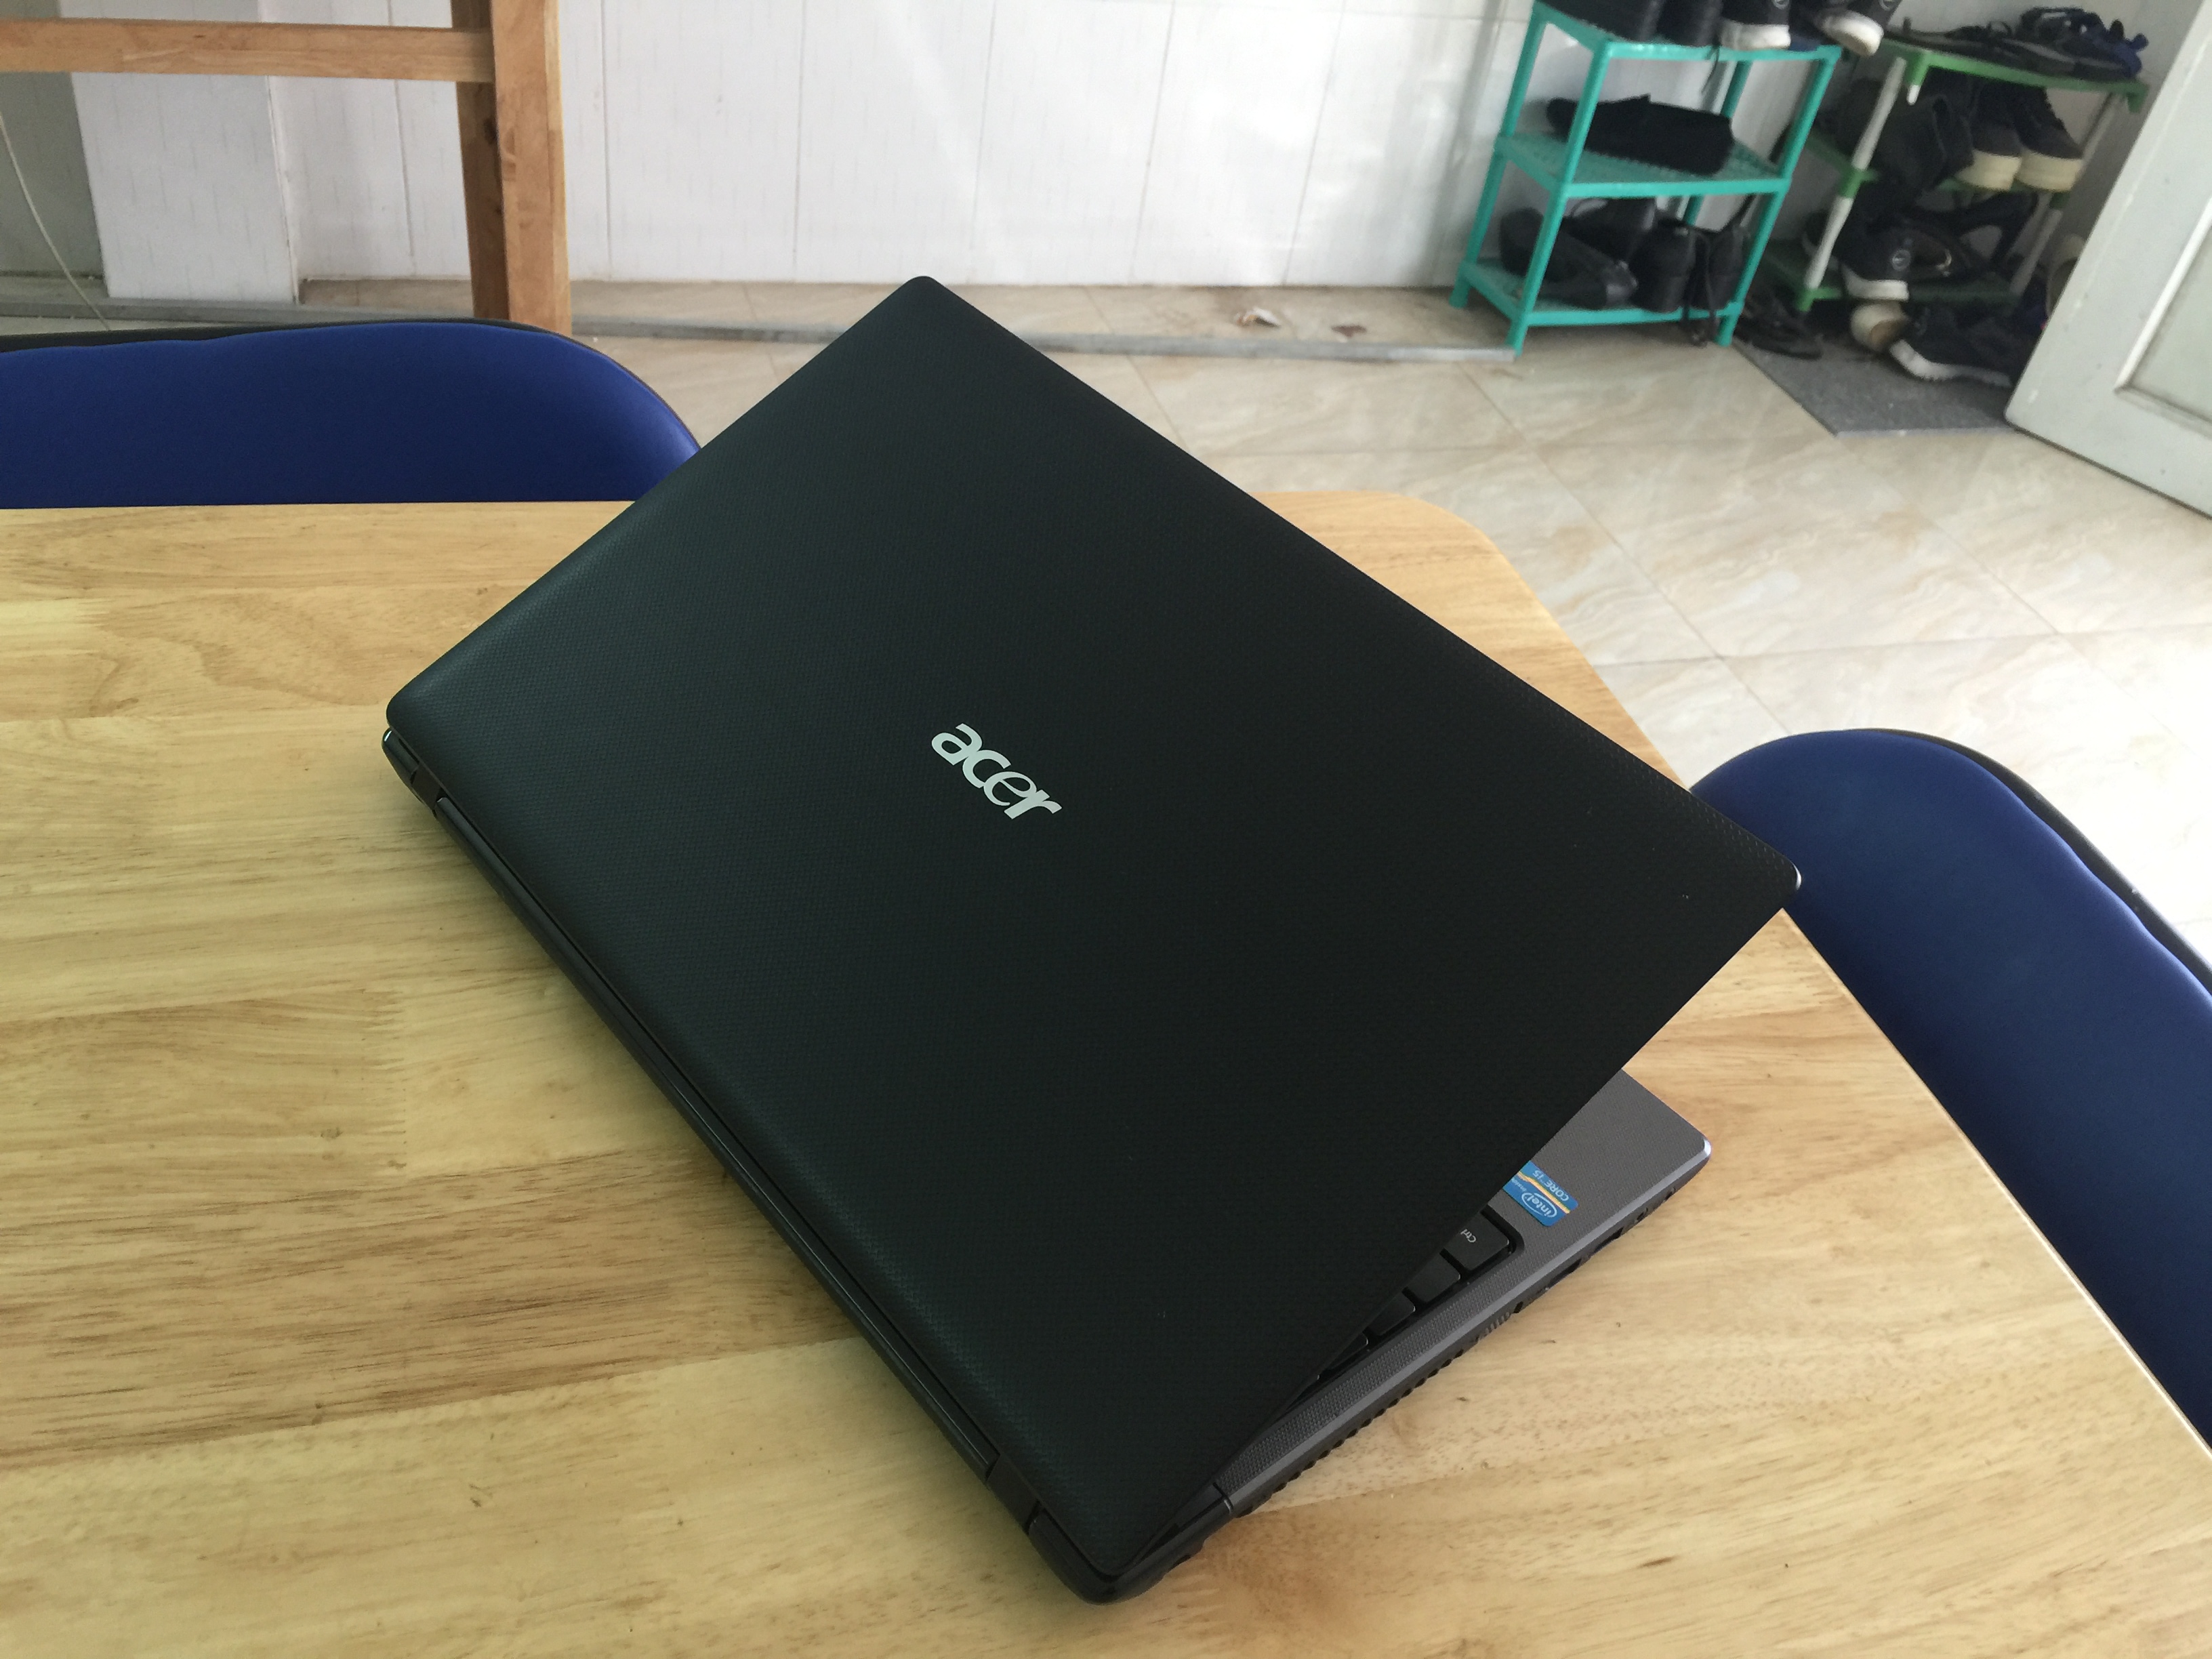 Laptop Acer ASPIRE 5750 , i5 4G, 500G, Đẹp zin 100%